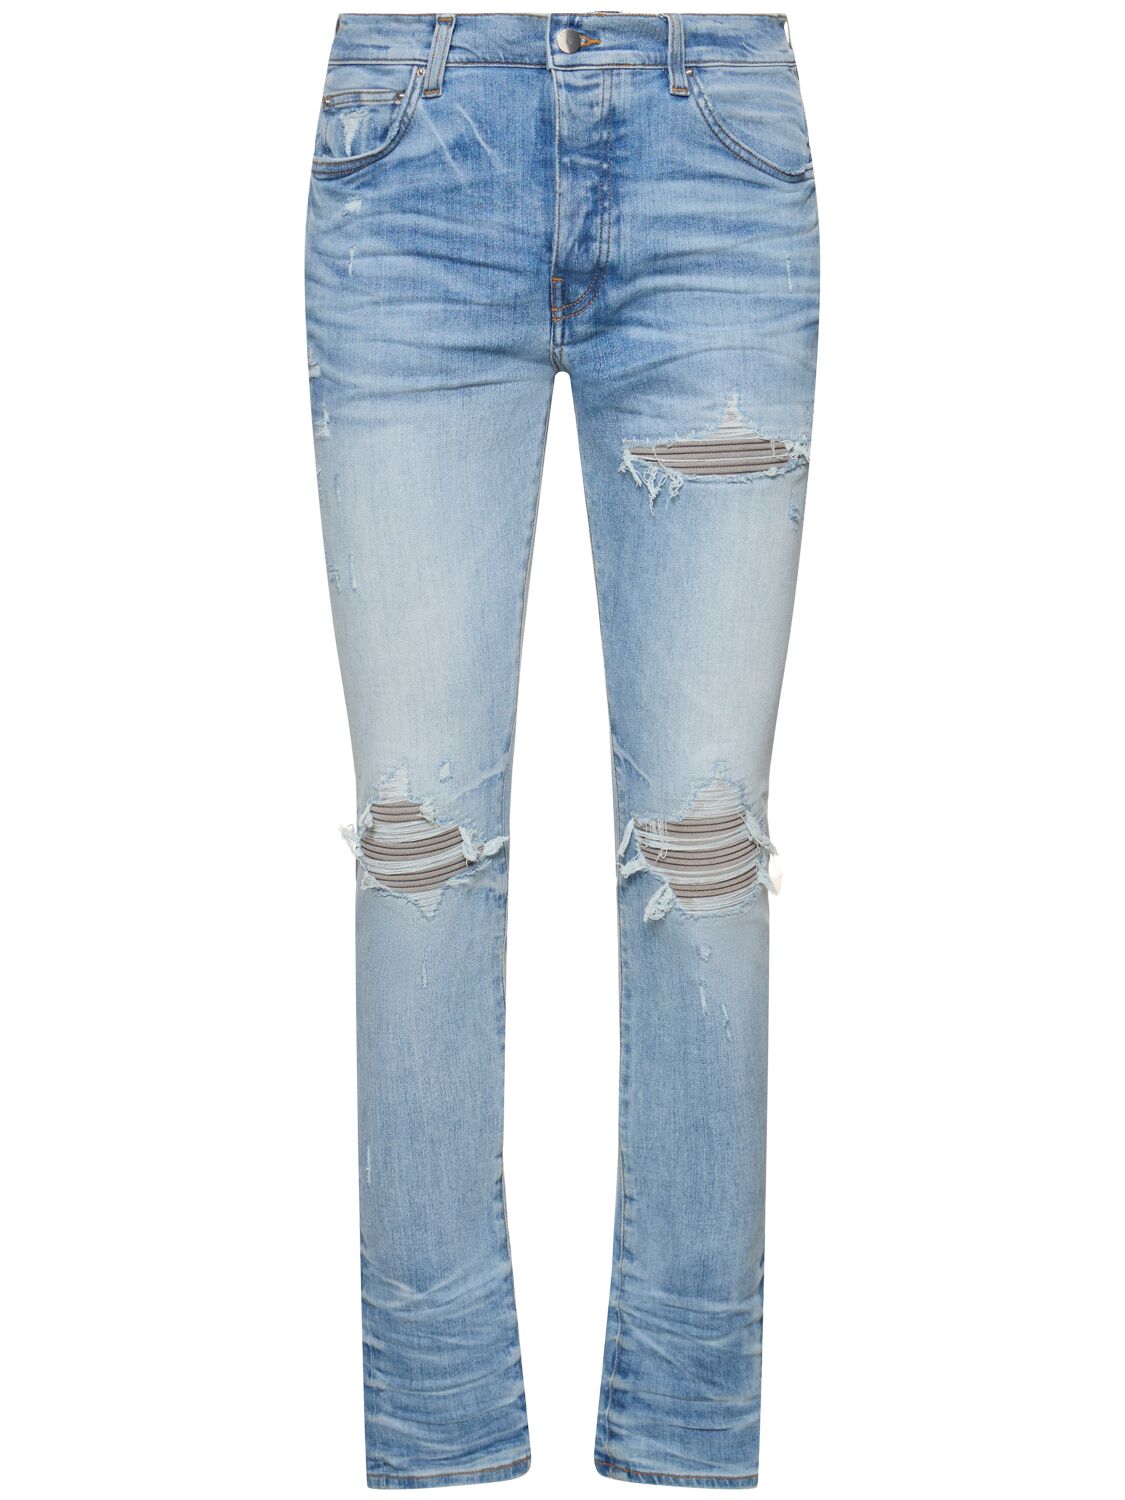 Image of Mx1 Skinny Cotton Denim Jeans